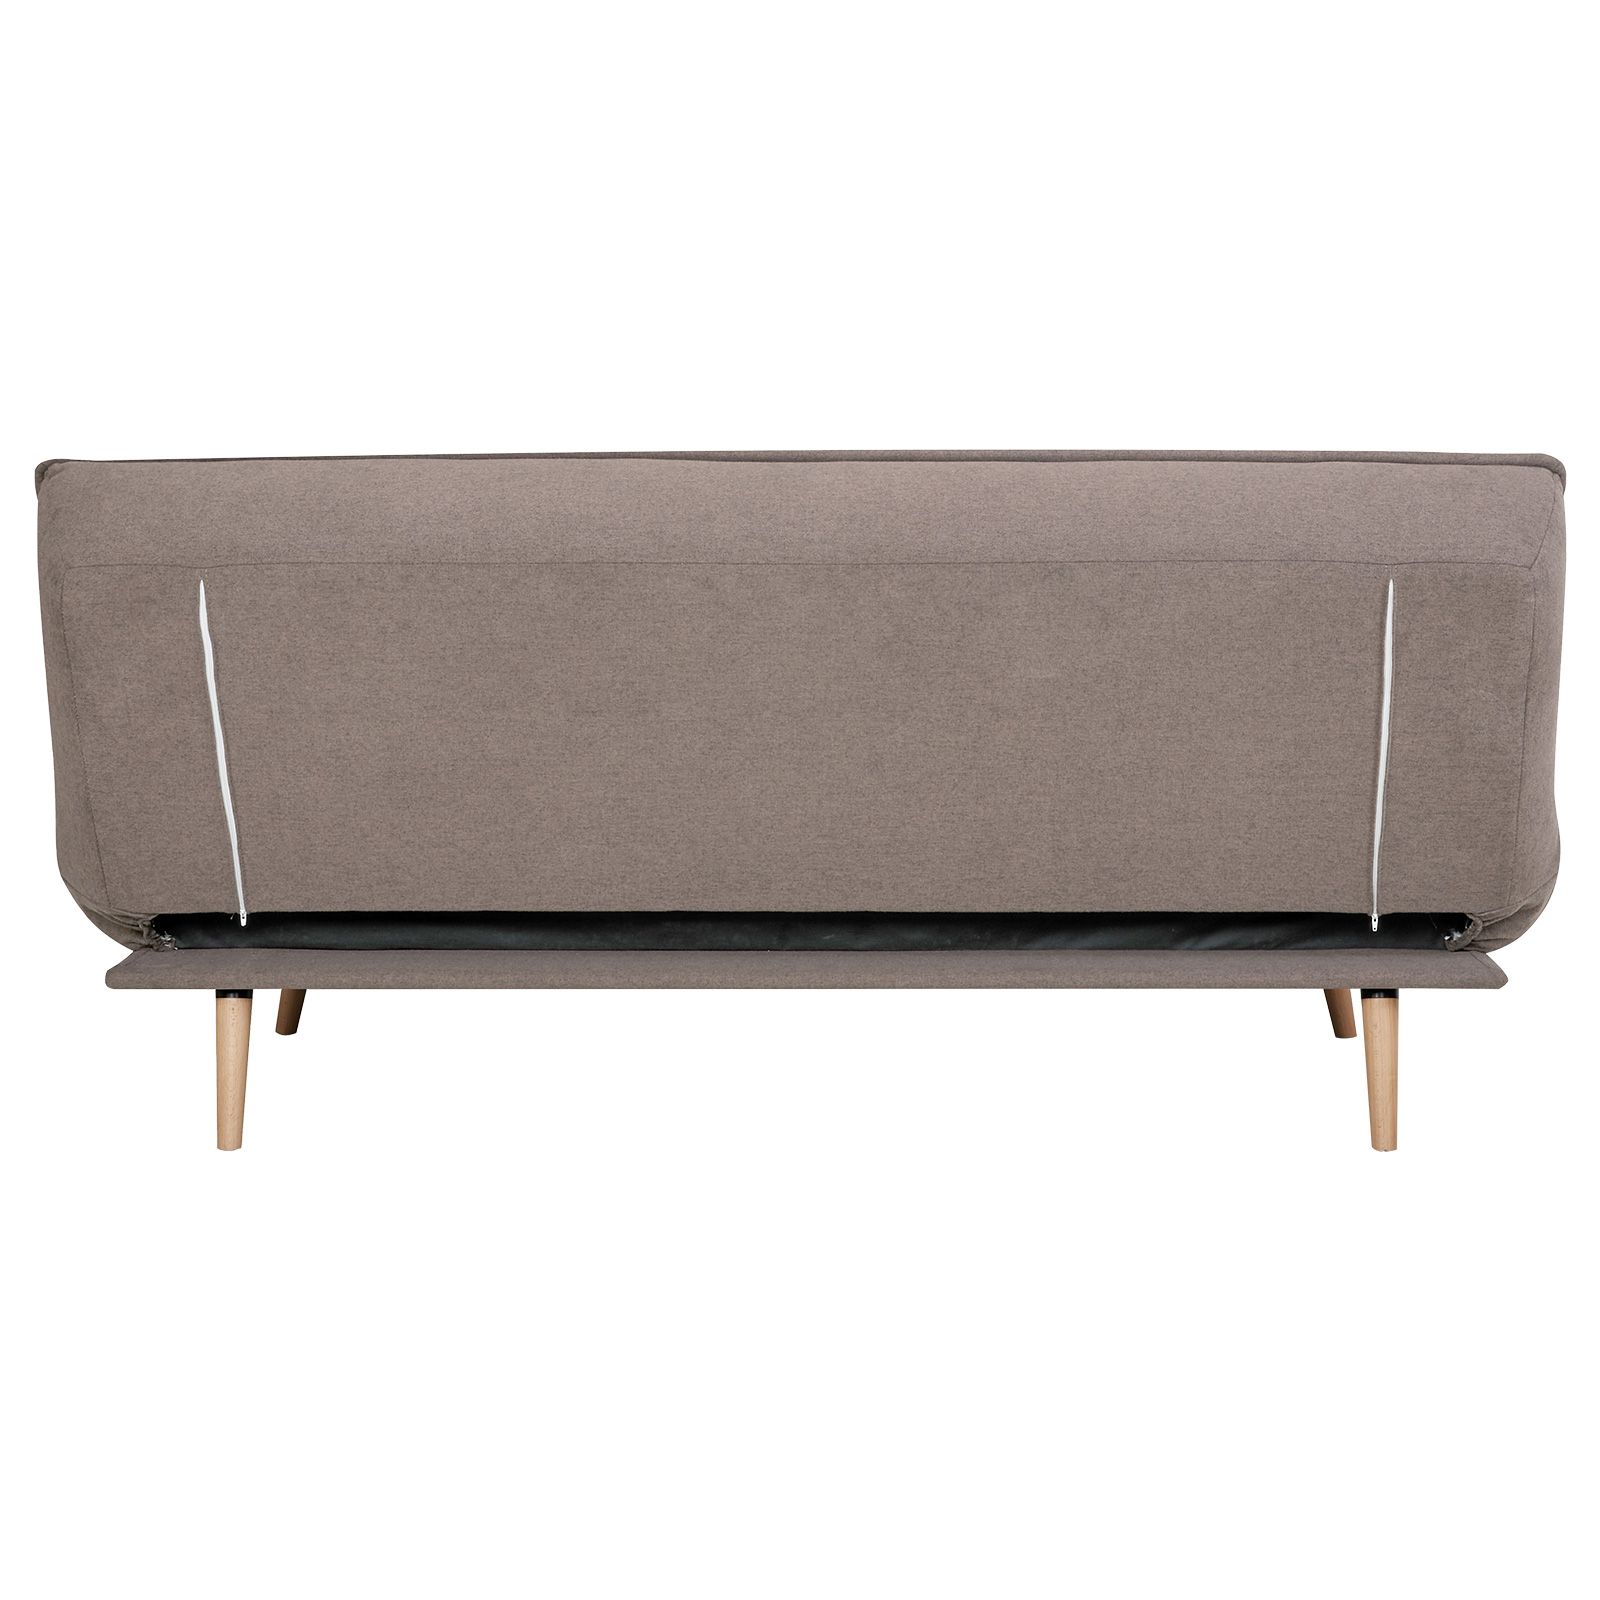 HUFRANCH | Sofá cama tapizado en marrón (194 x 95 x 89 cm)